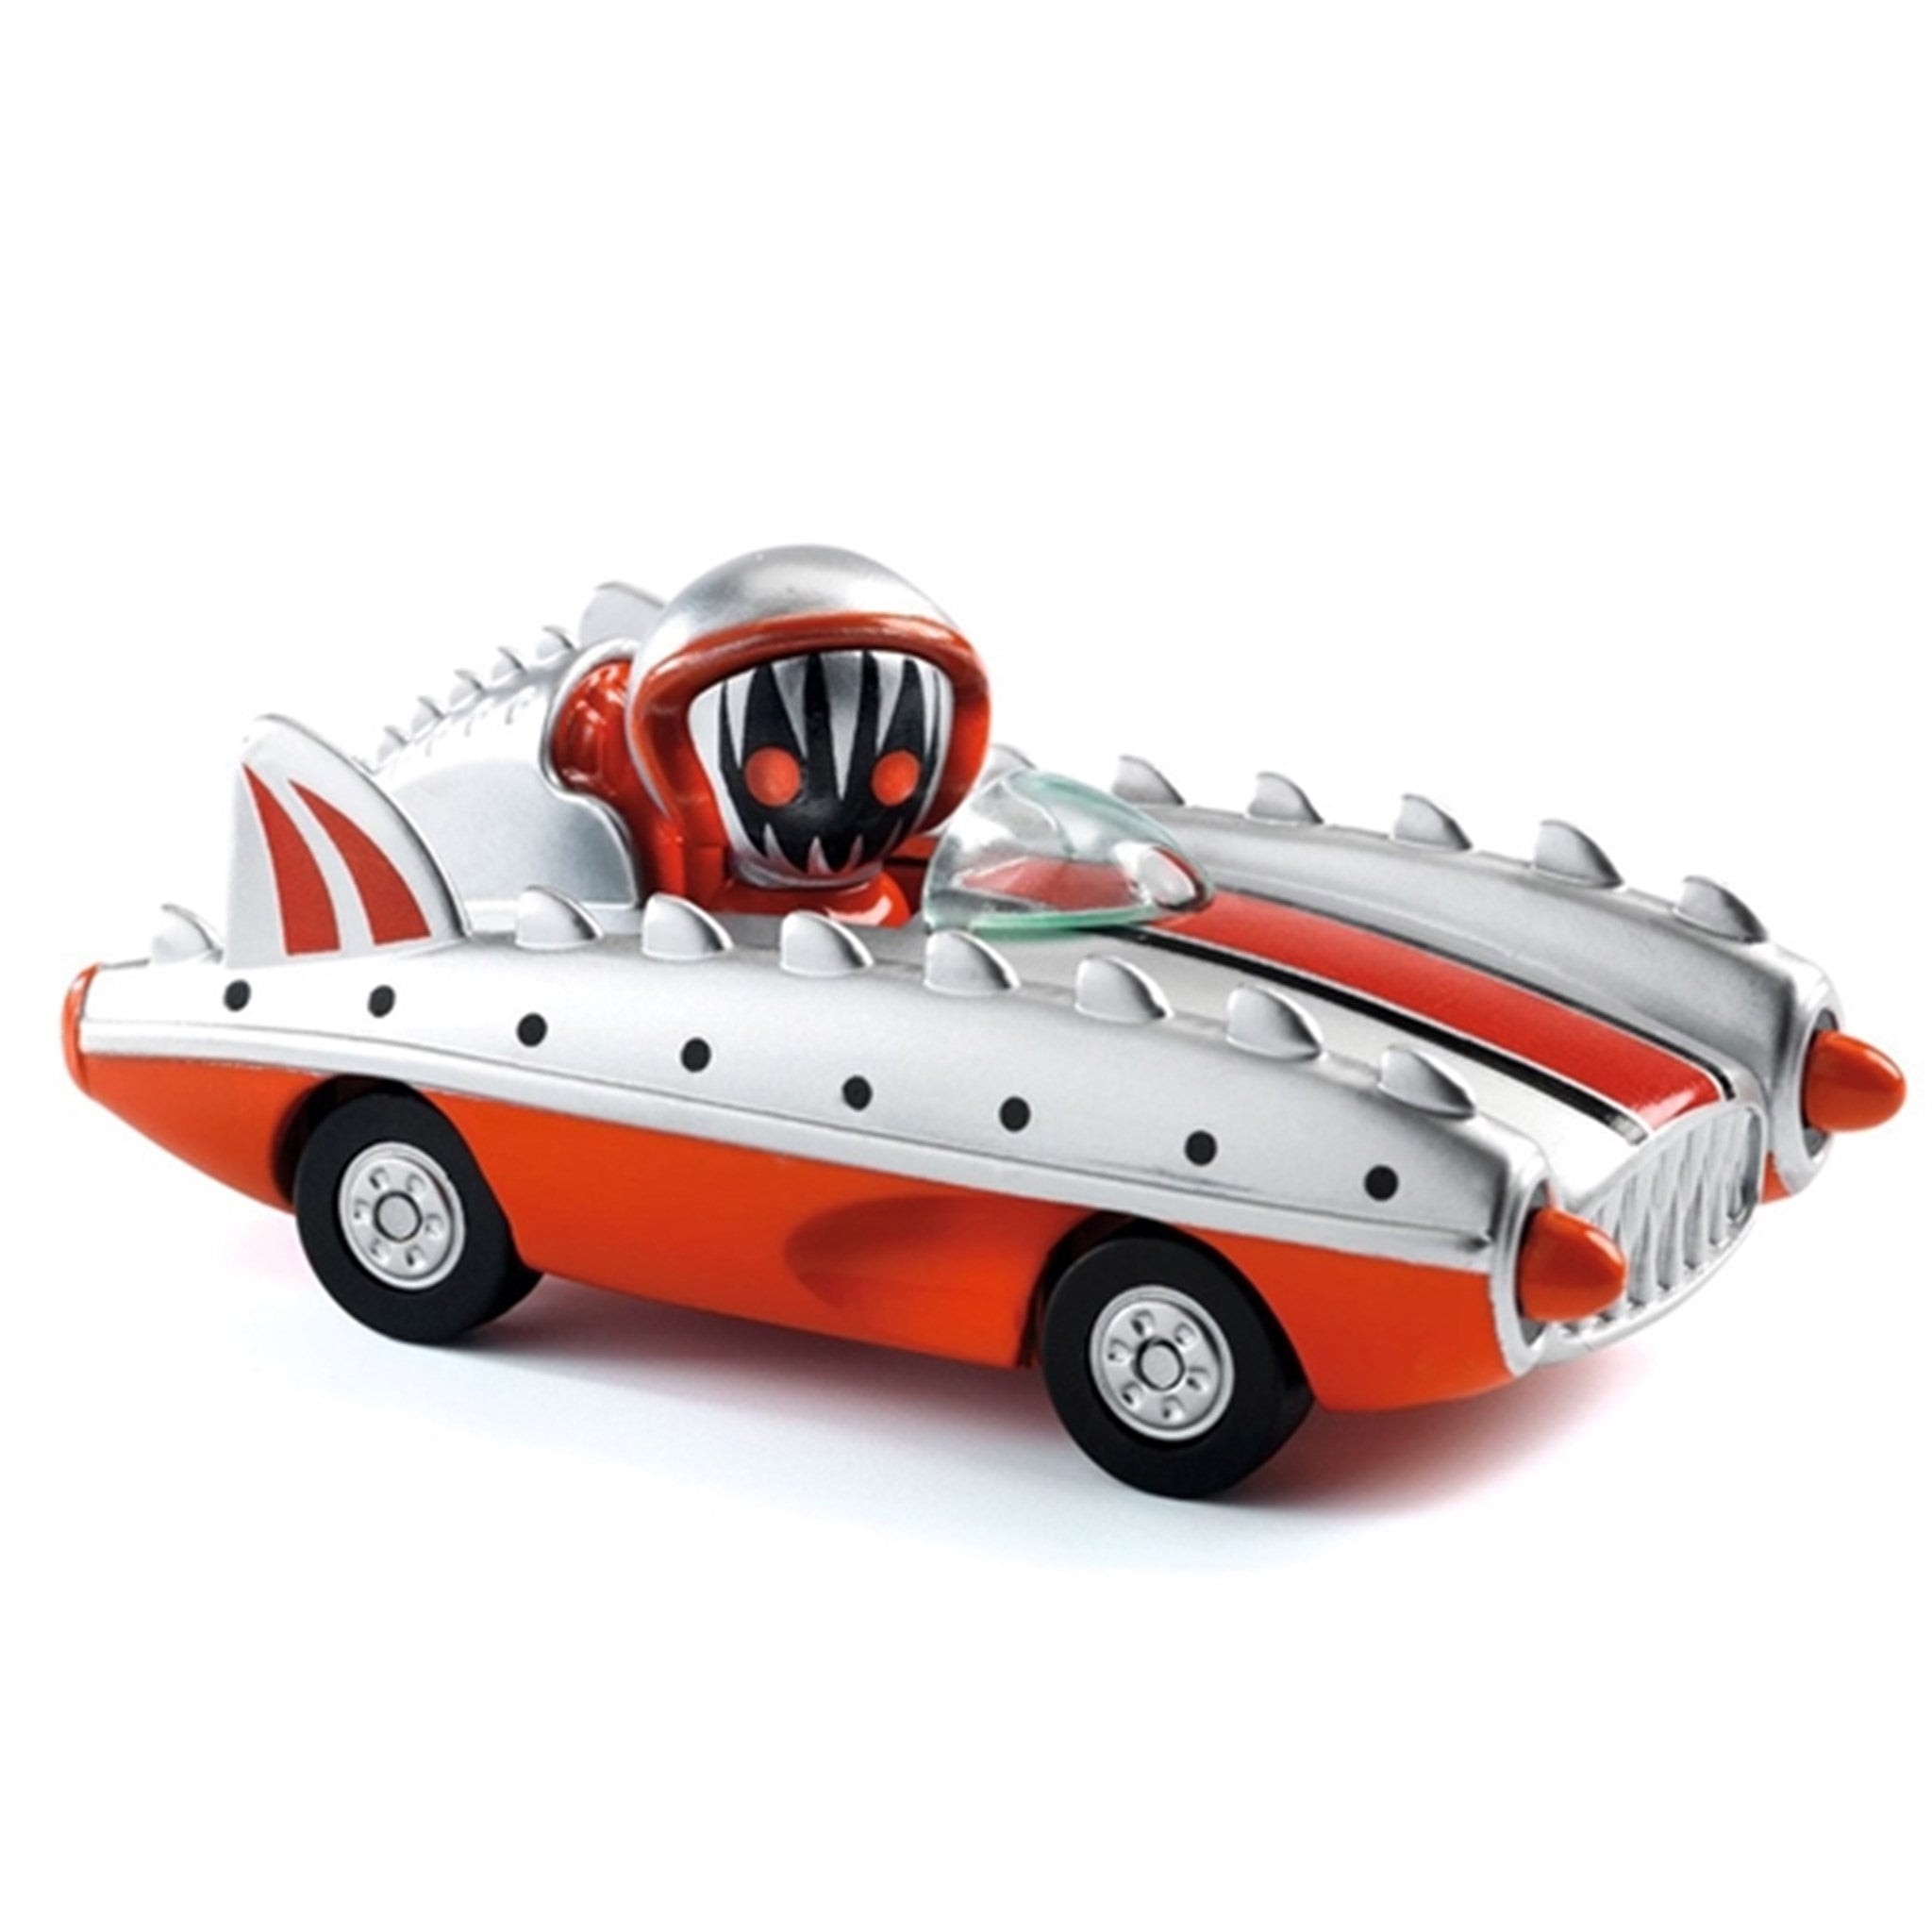 Djeco Crazy Motors Racerbil Piranha Kart